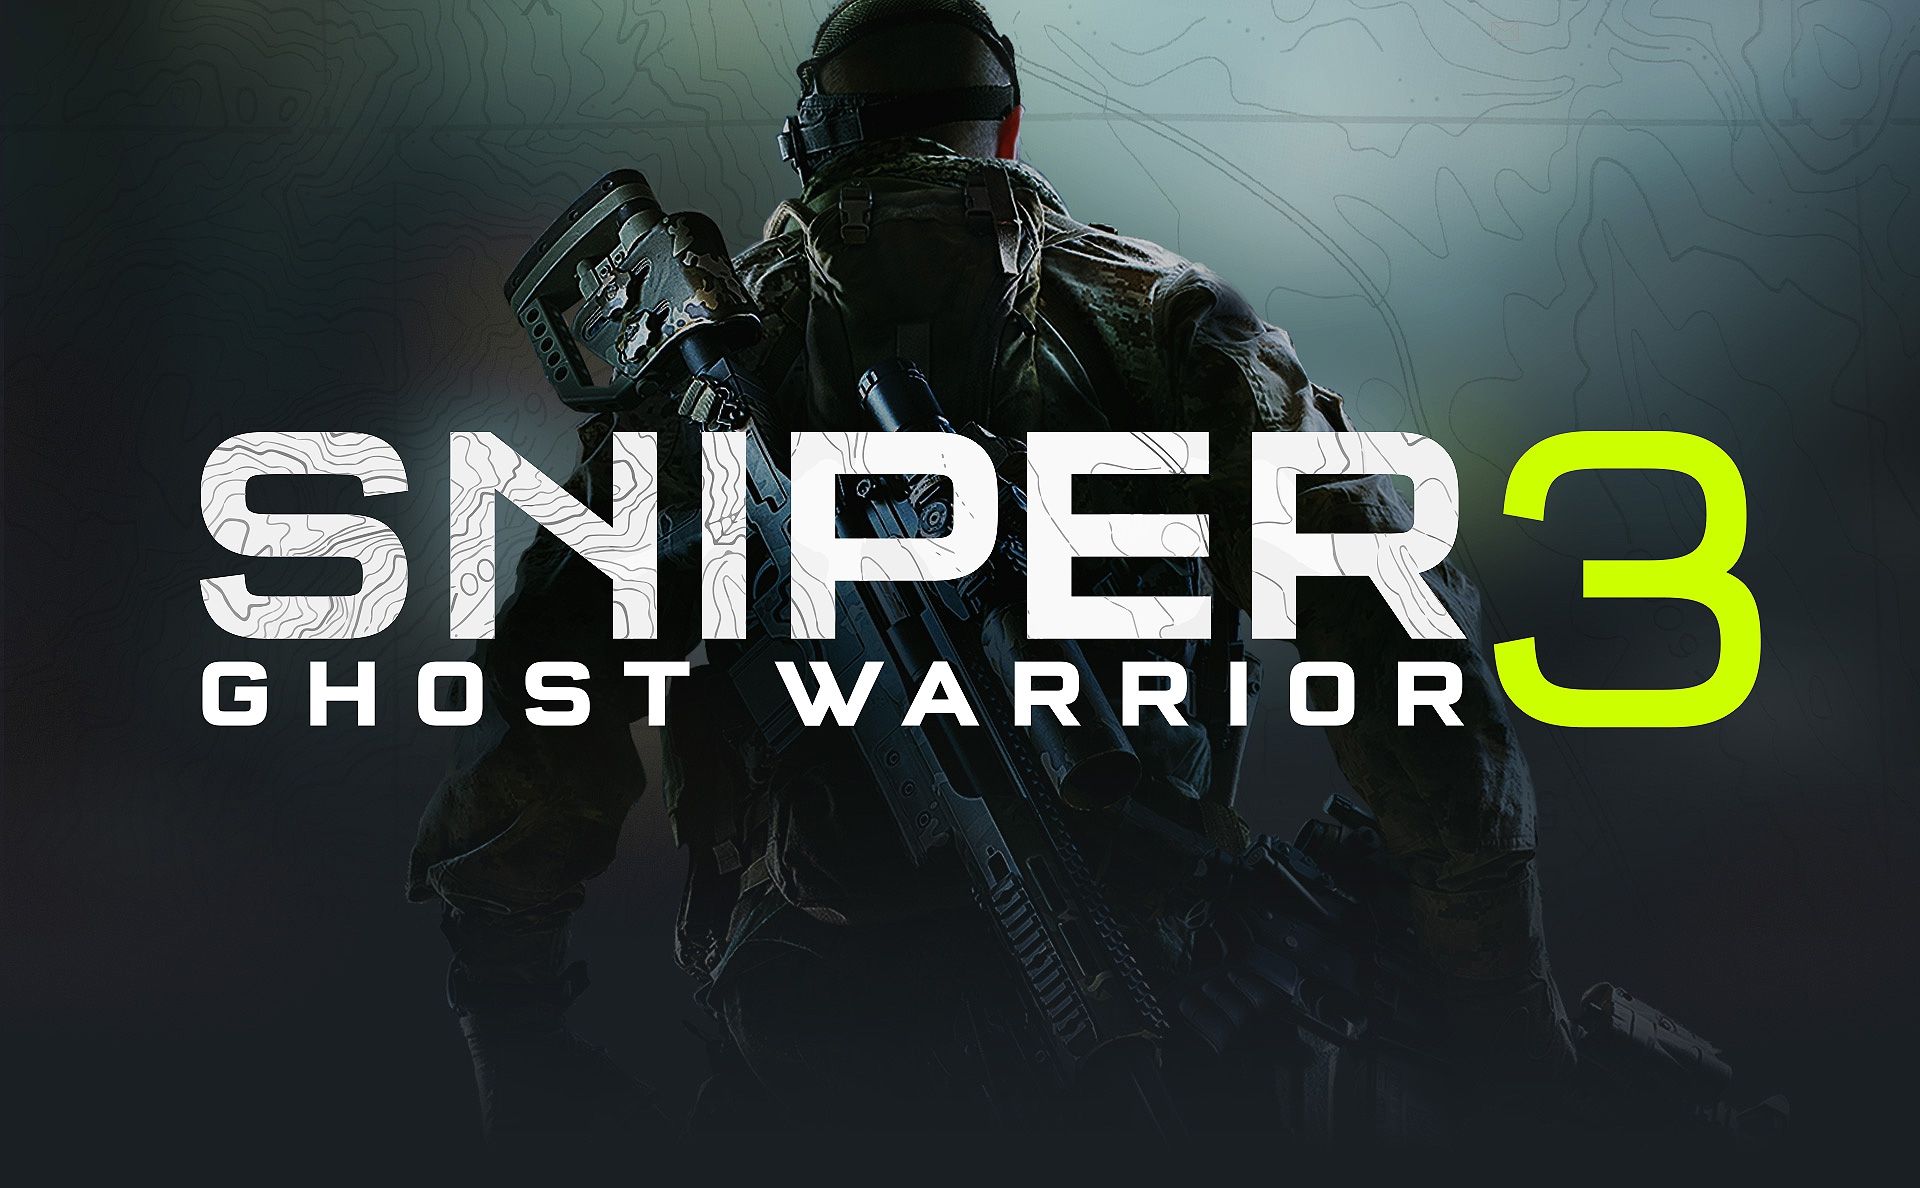 Sniper: Ghost Warrior 3 slitta da Gennaio ad Aprile